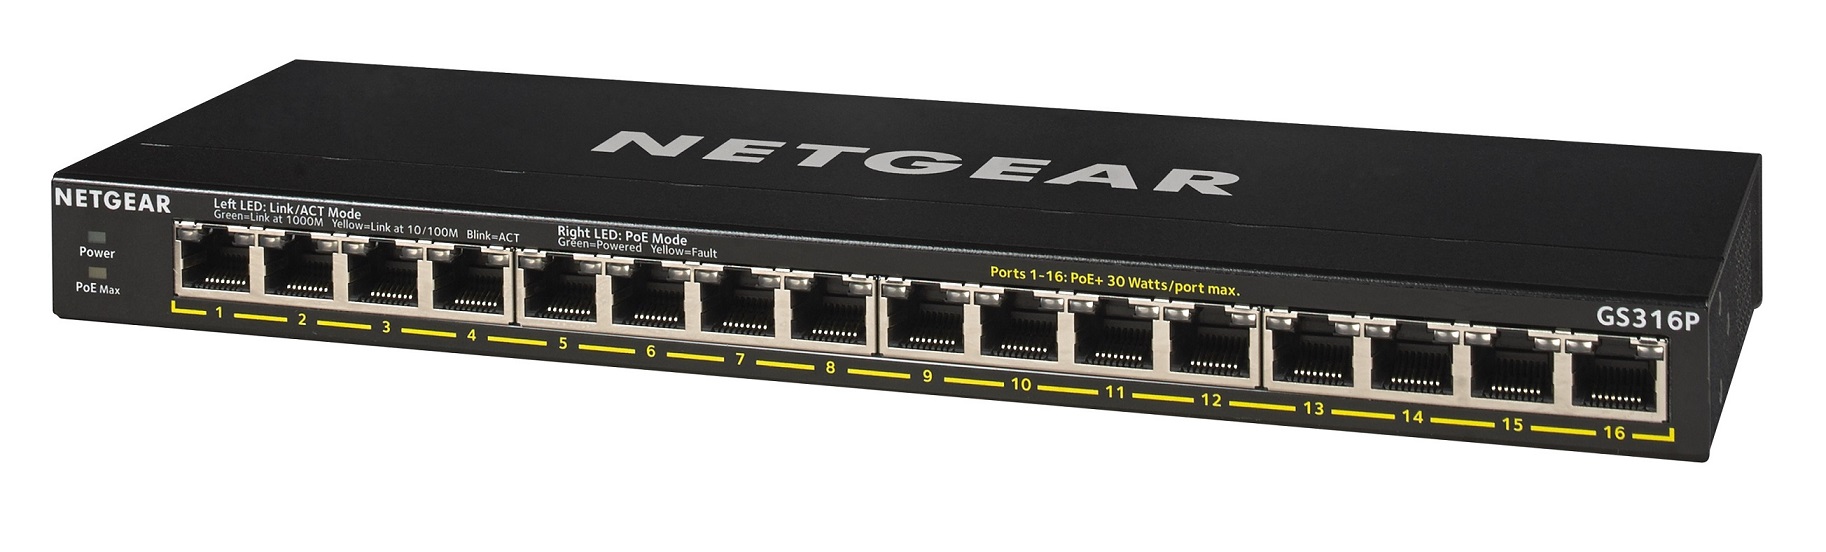 NETGEAR GS316P, 16-Port Gigabit POE 115W Unmanaged Switch